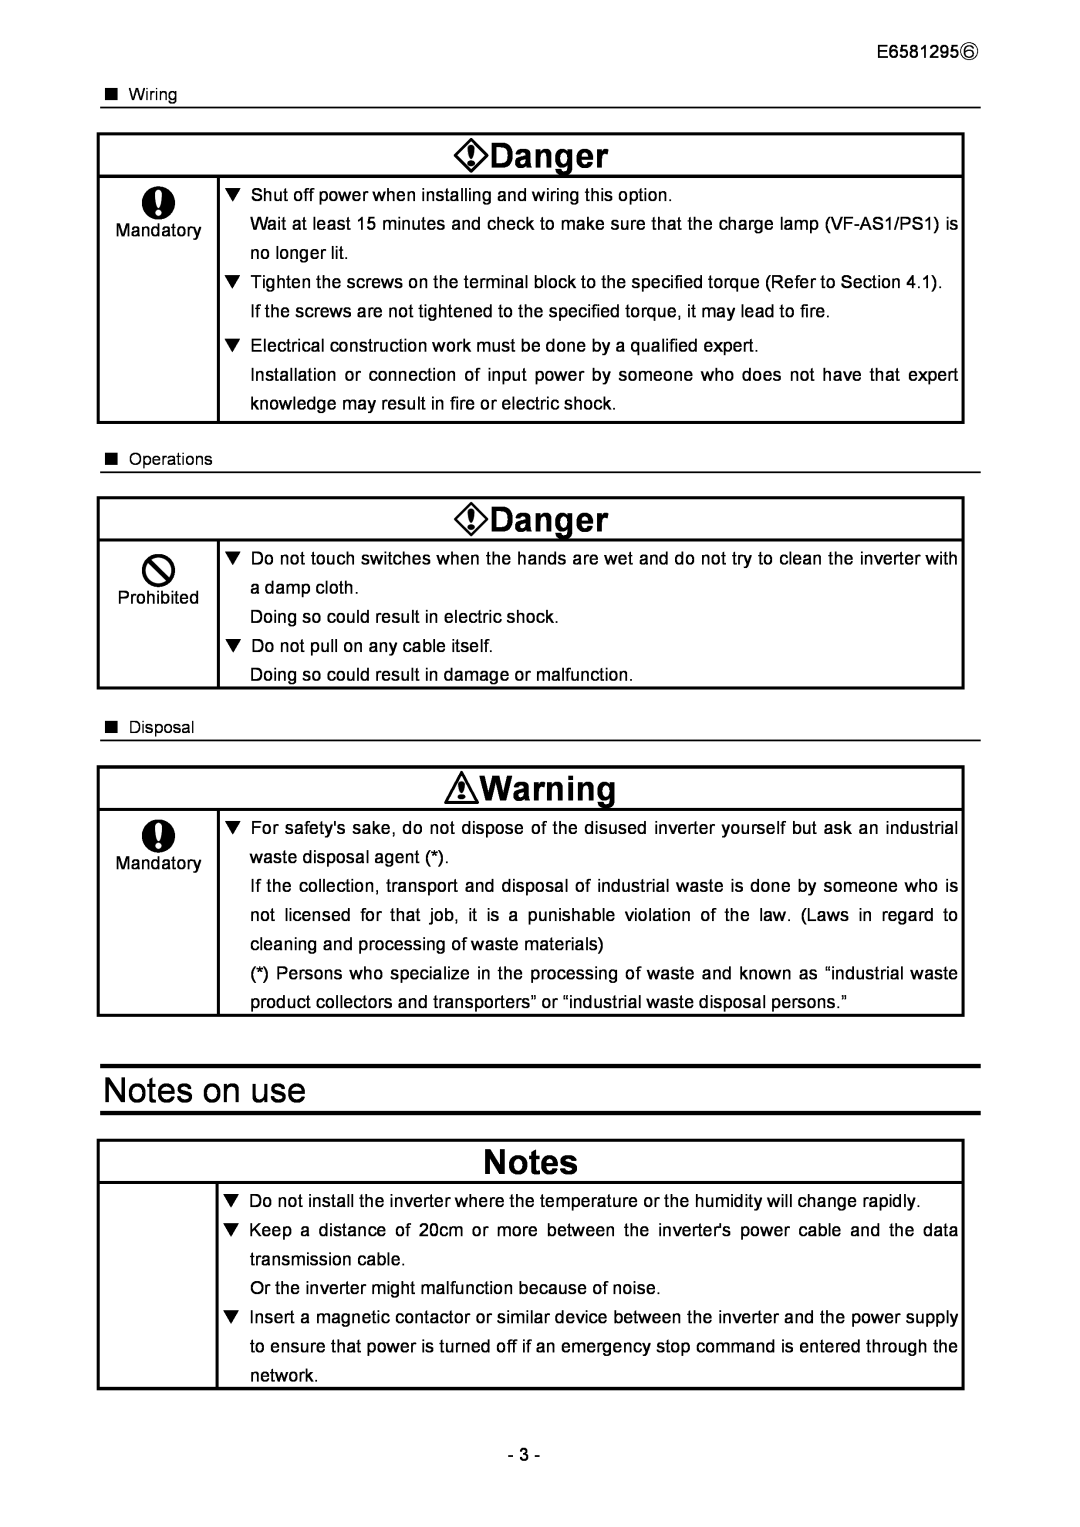 Toshiba DEV002Z instruction manual Notes on use, Danger 